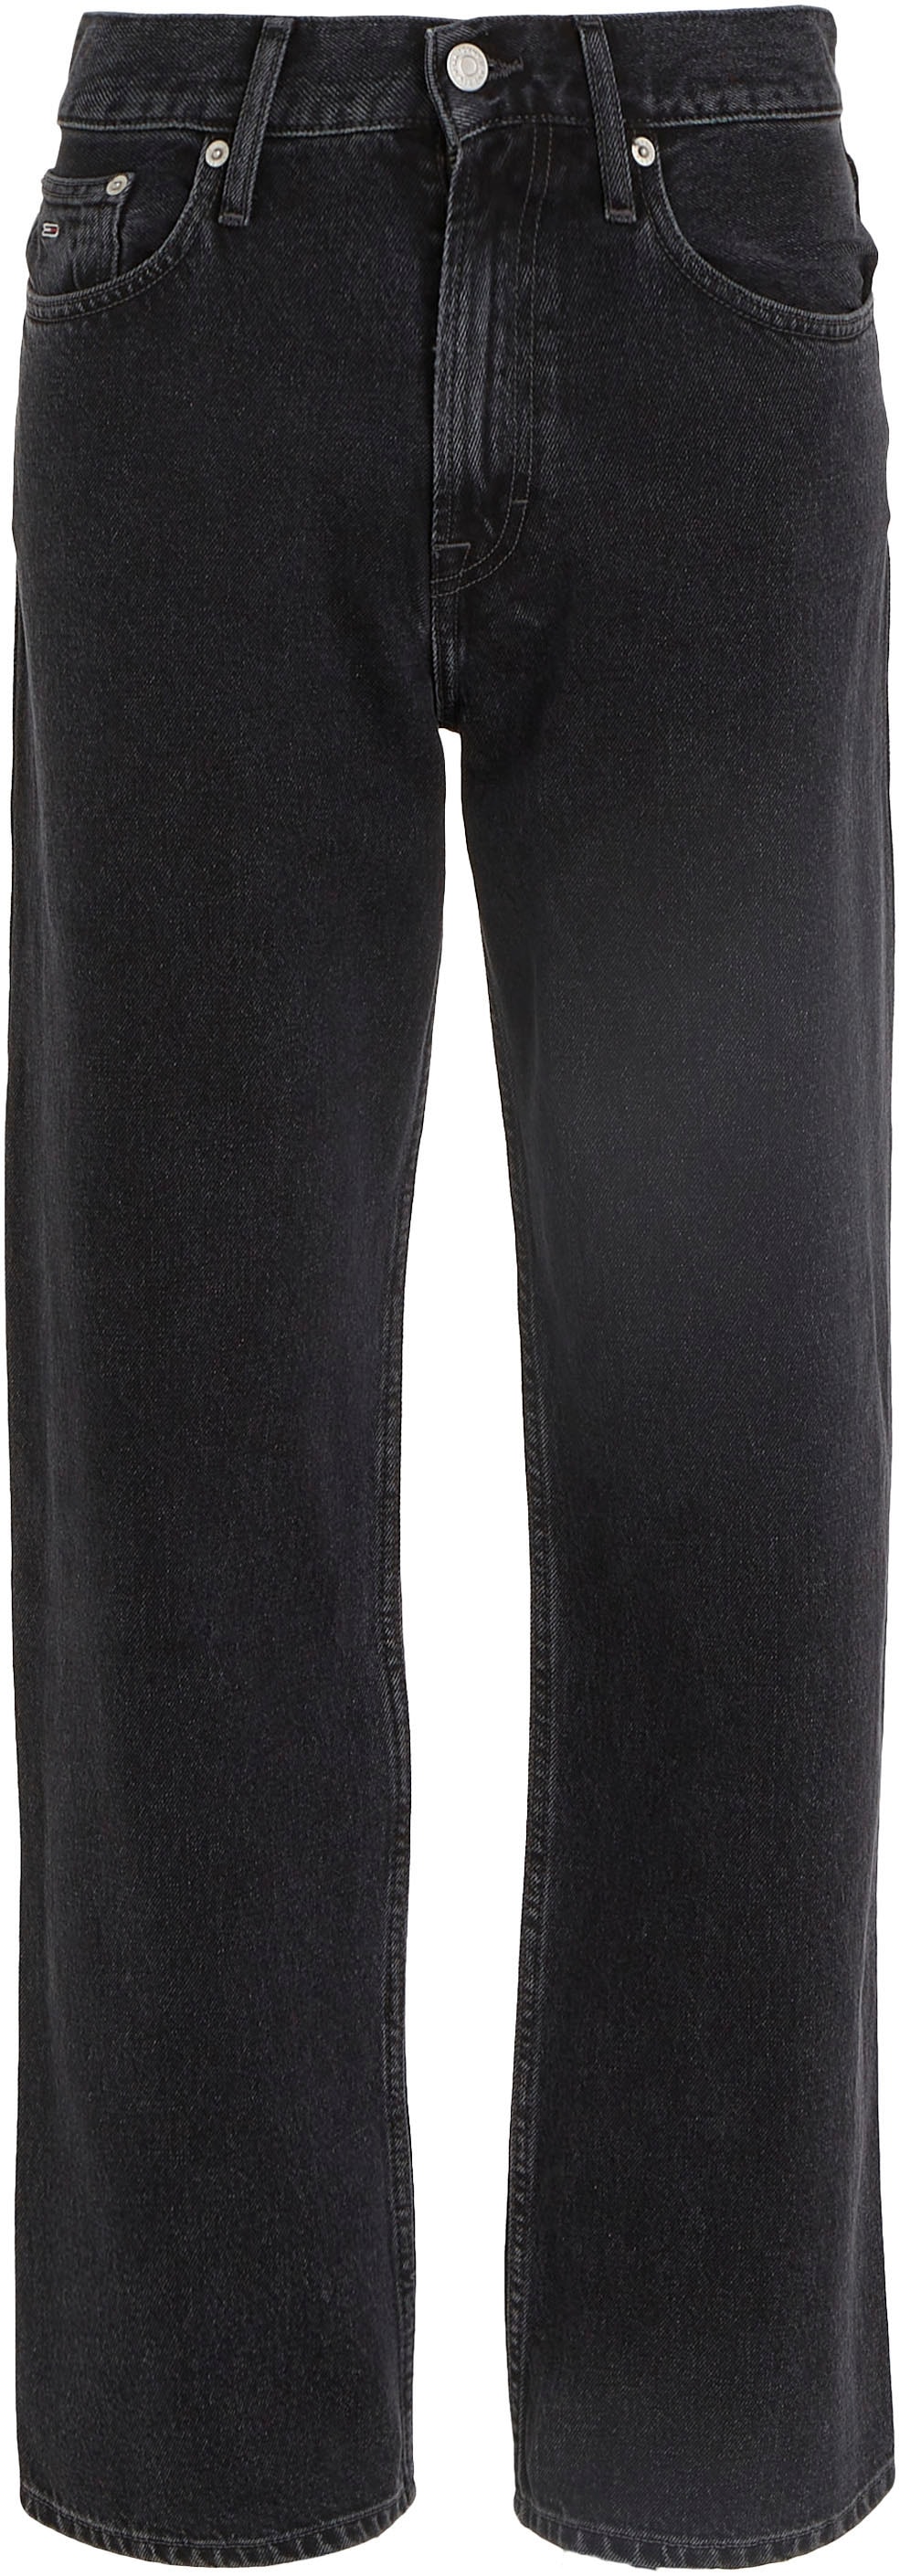 »BETSY shoppen auf Jeans Tommy CG4139«, dem MR Bund Loose-fit-Jeans LS Markenlabel mit